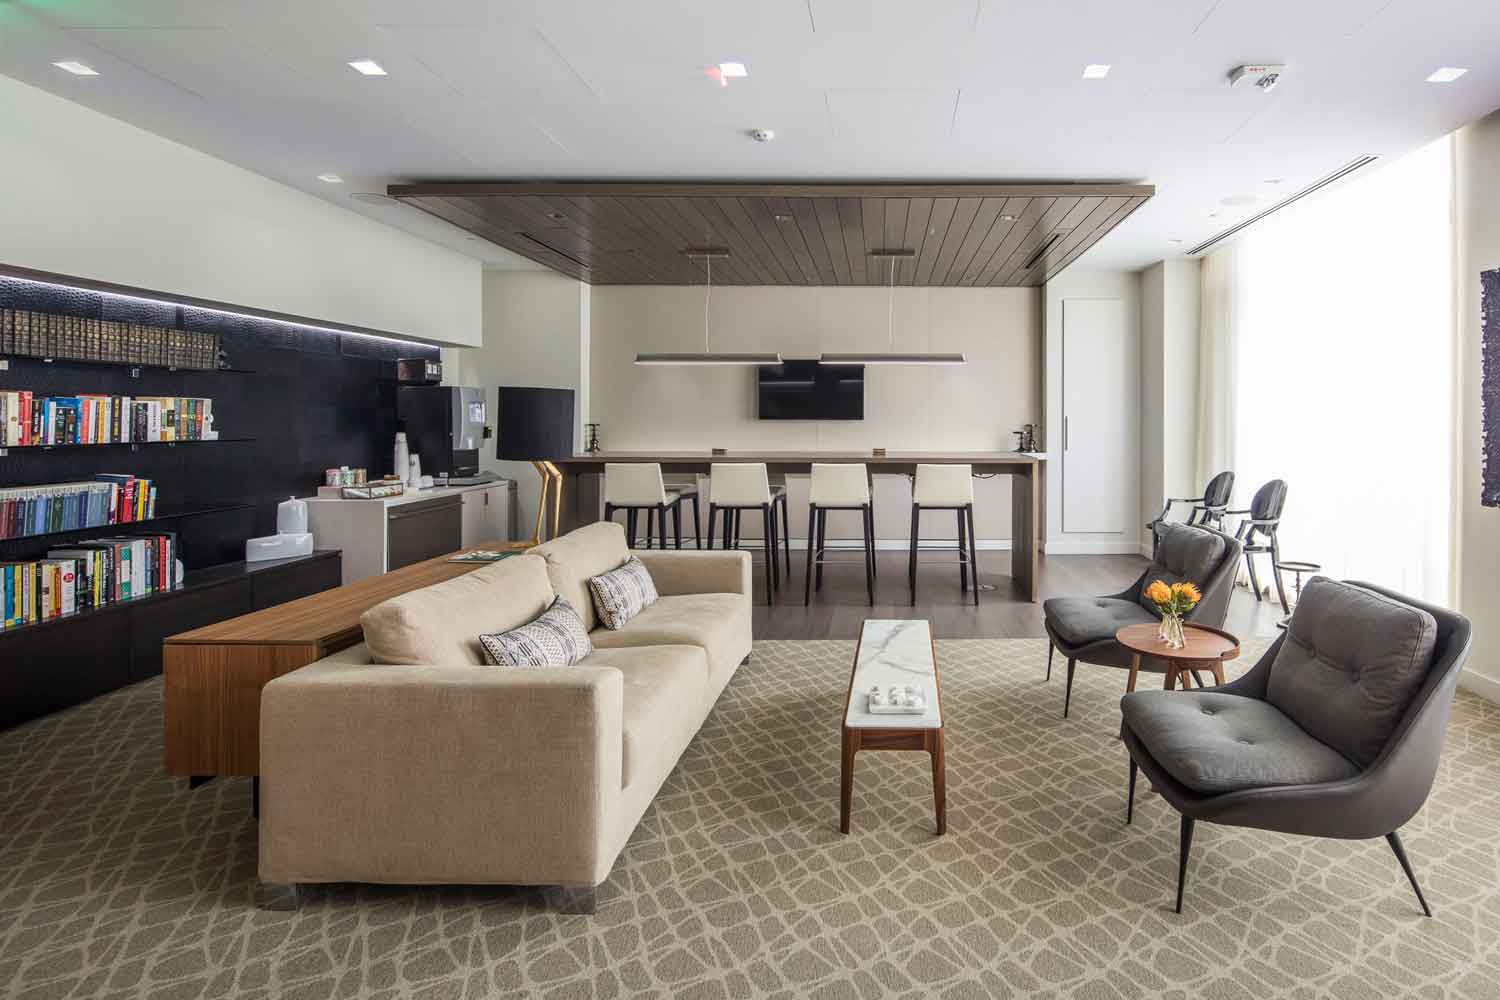 30 Dalton Luxury Apartments furnished Casa Design Group